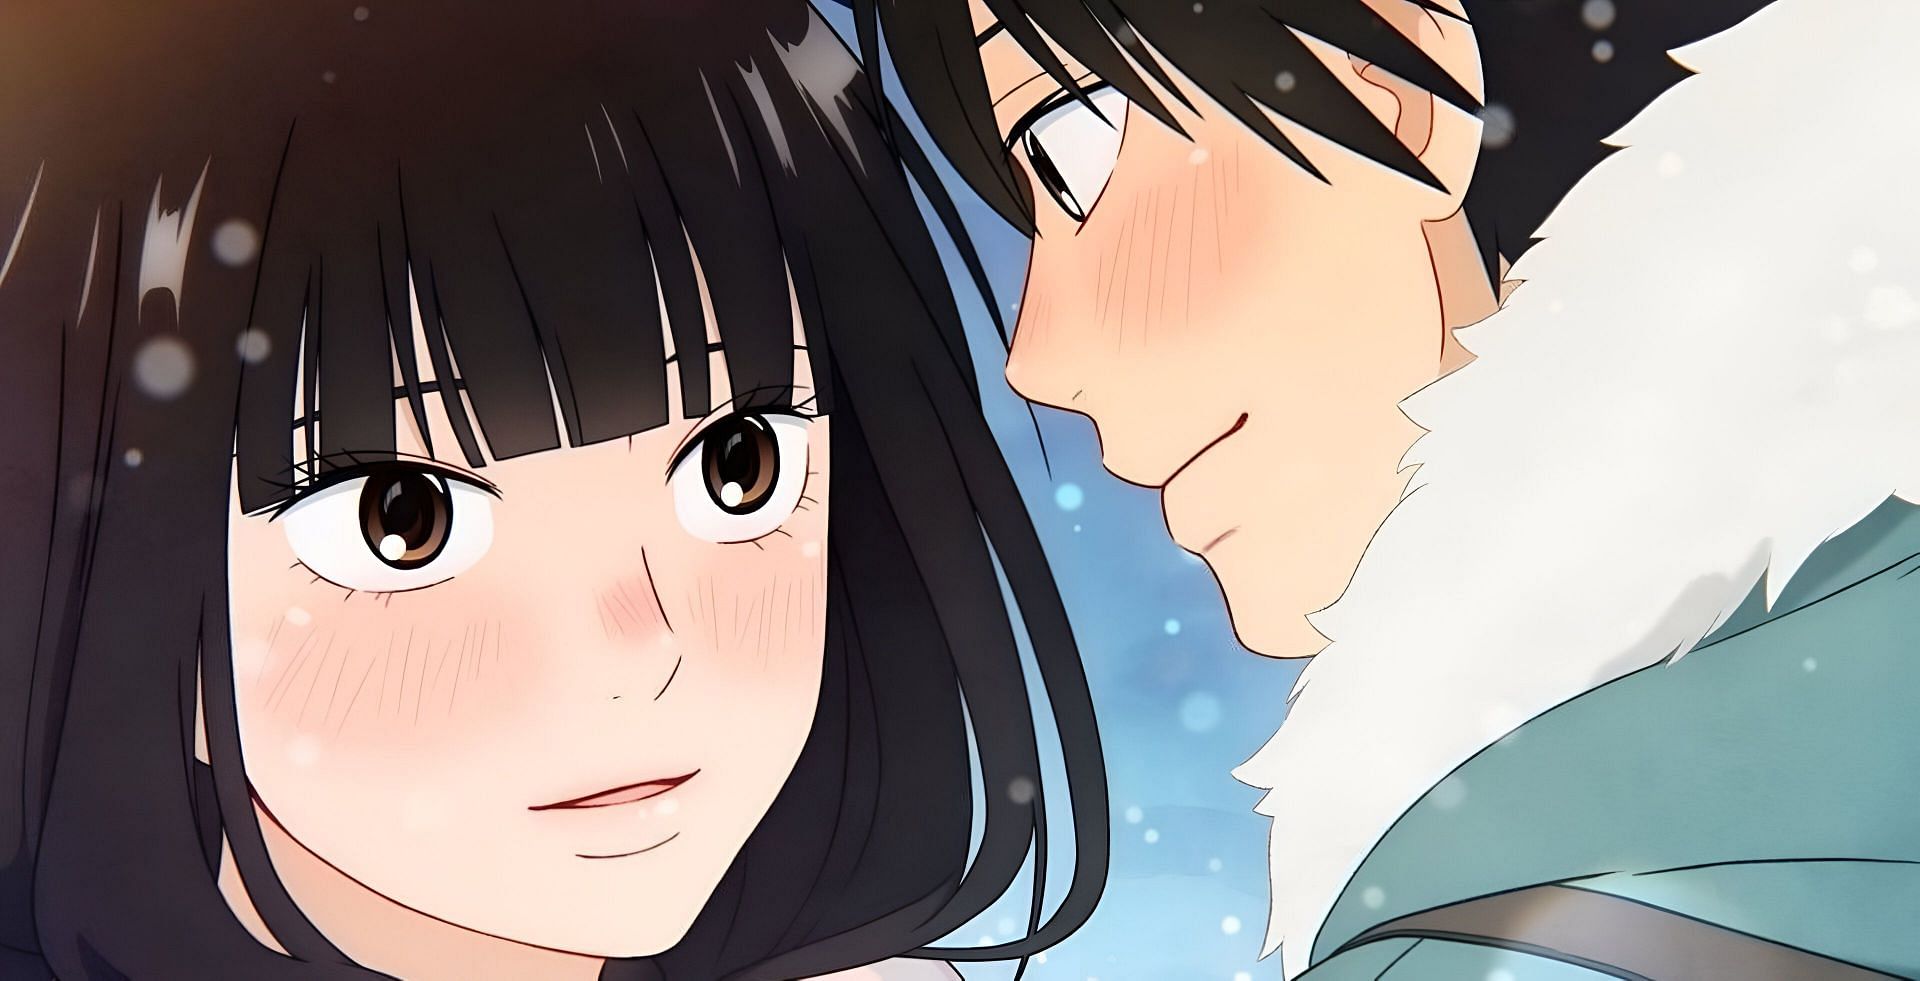 Sawako and Shota, as seen in Kimi ni Todoke season 3 (Image via Production I.G/Netflix)